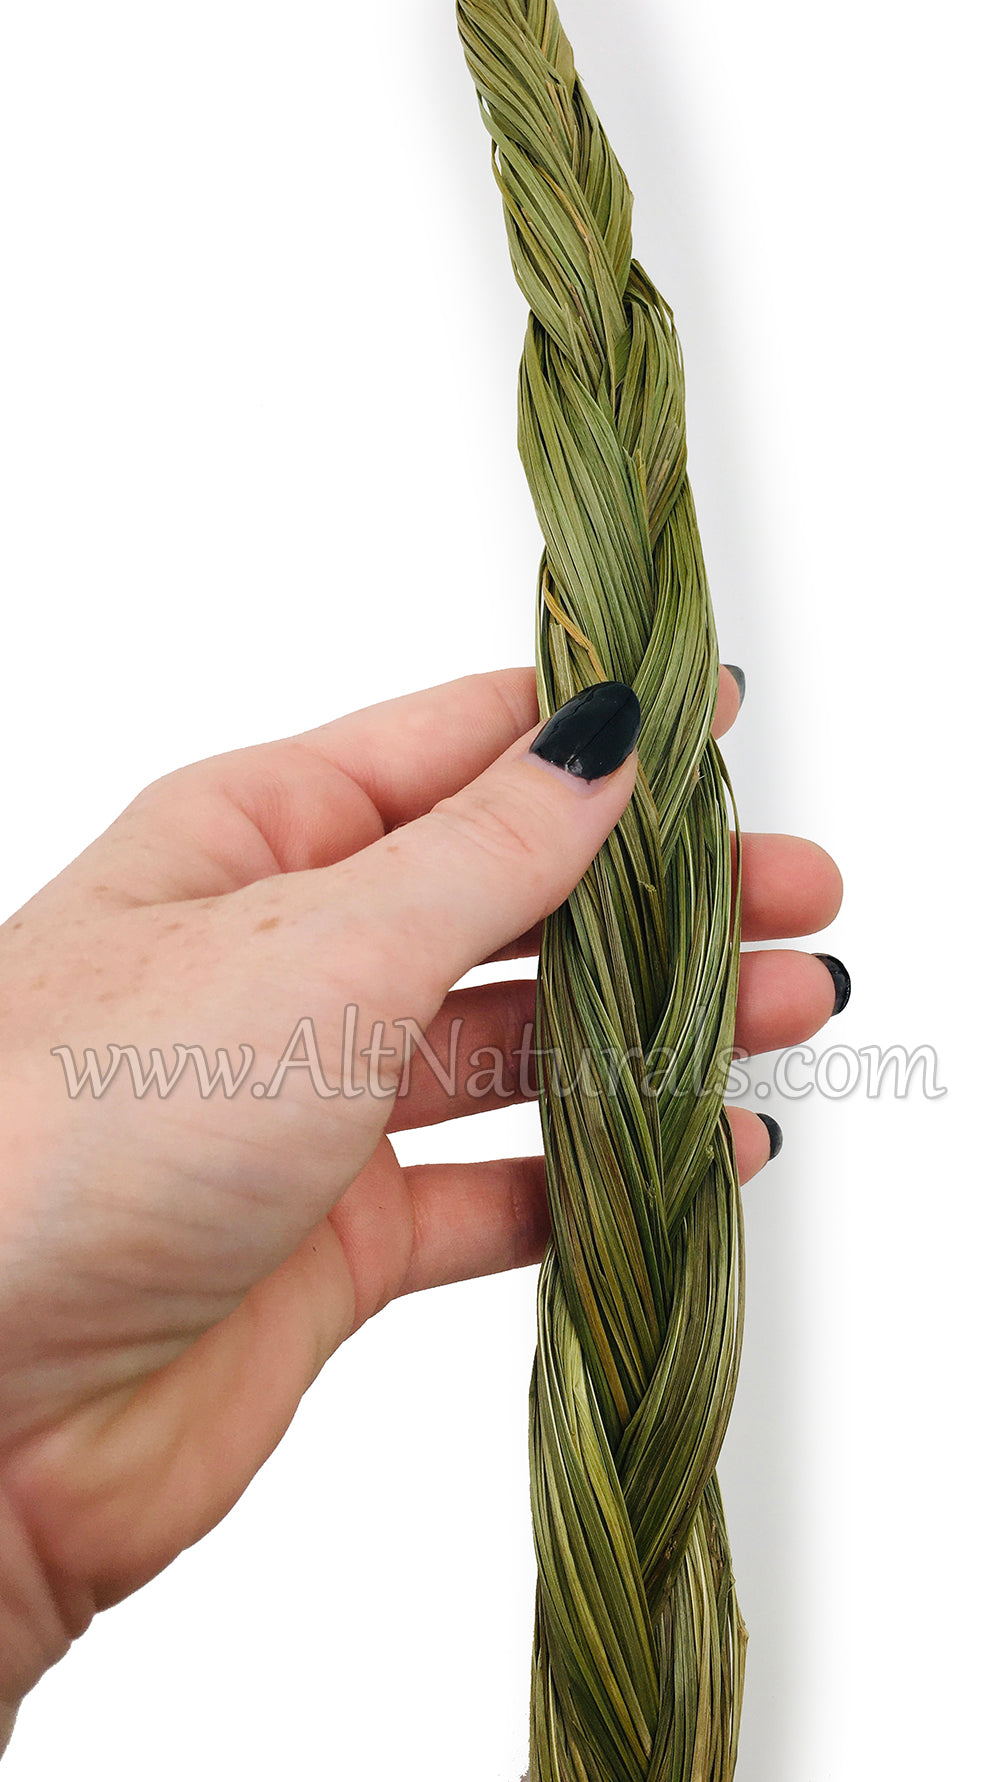 Sweetgrass Incense Braid